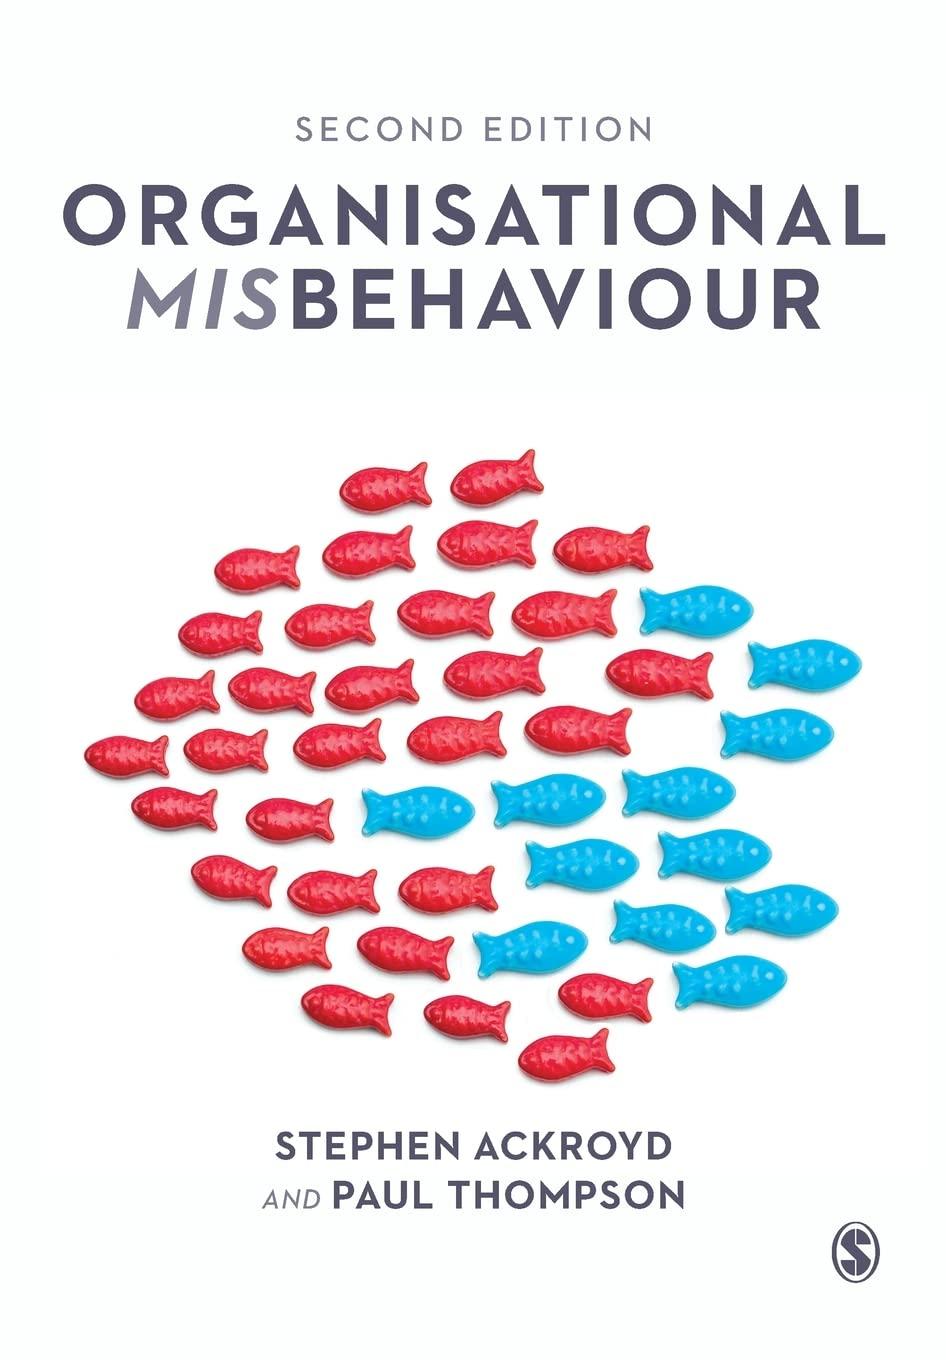 organisational misbehaviour 2nd edition stephen ackroyd, paul thompson 1446299635, 978-1446299630